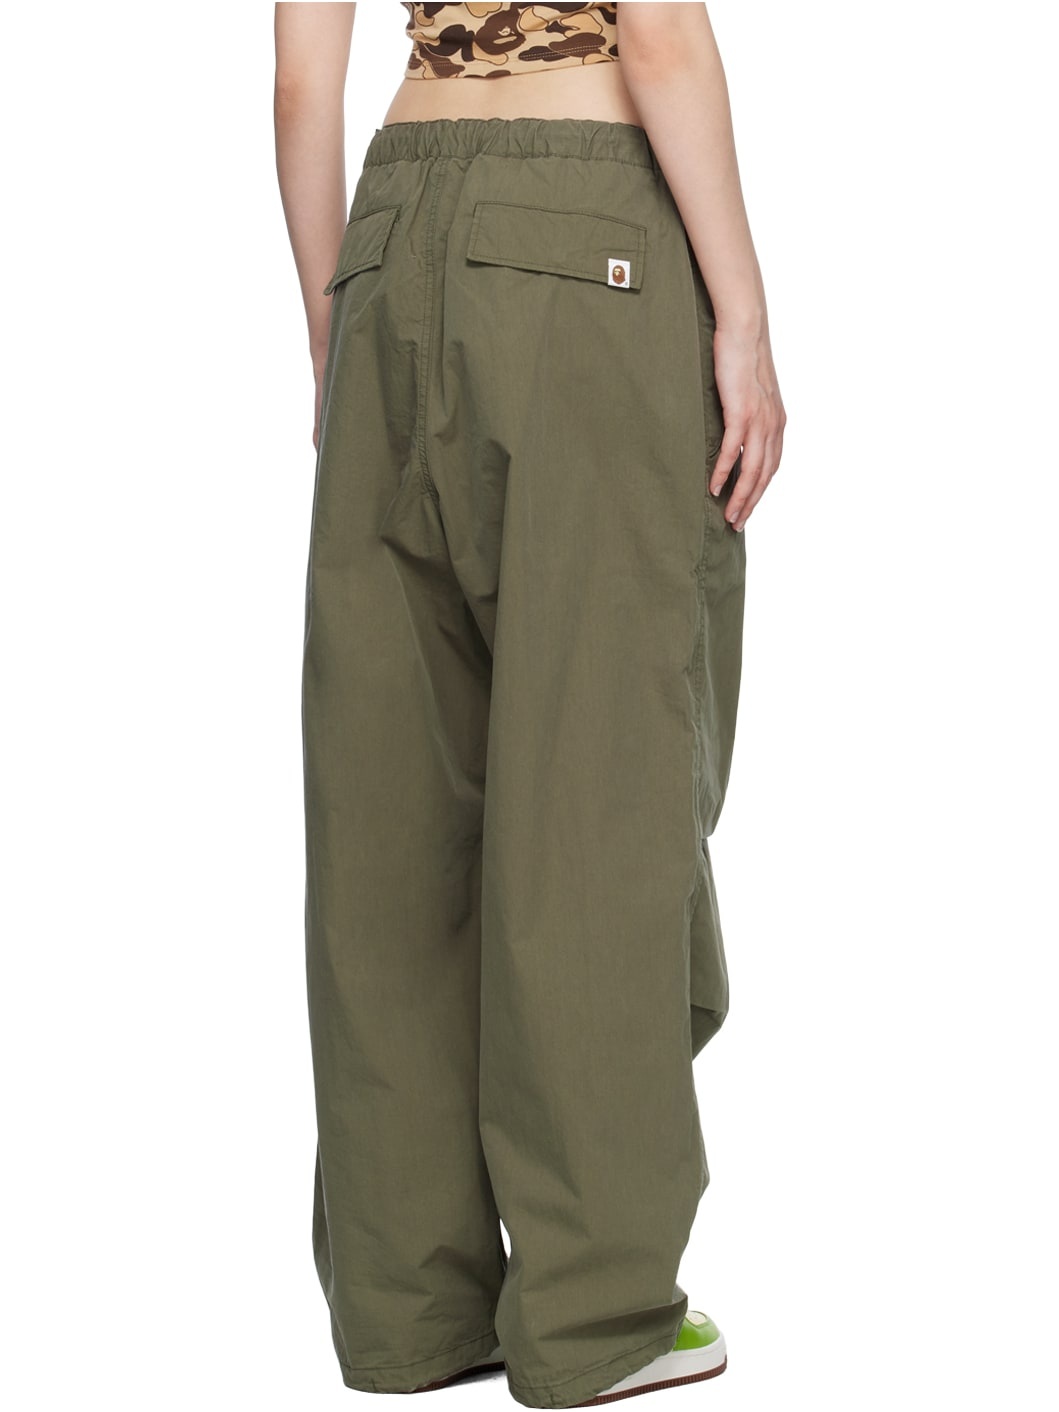 Khaki Army Trousers - 3